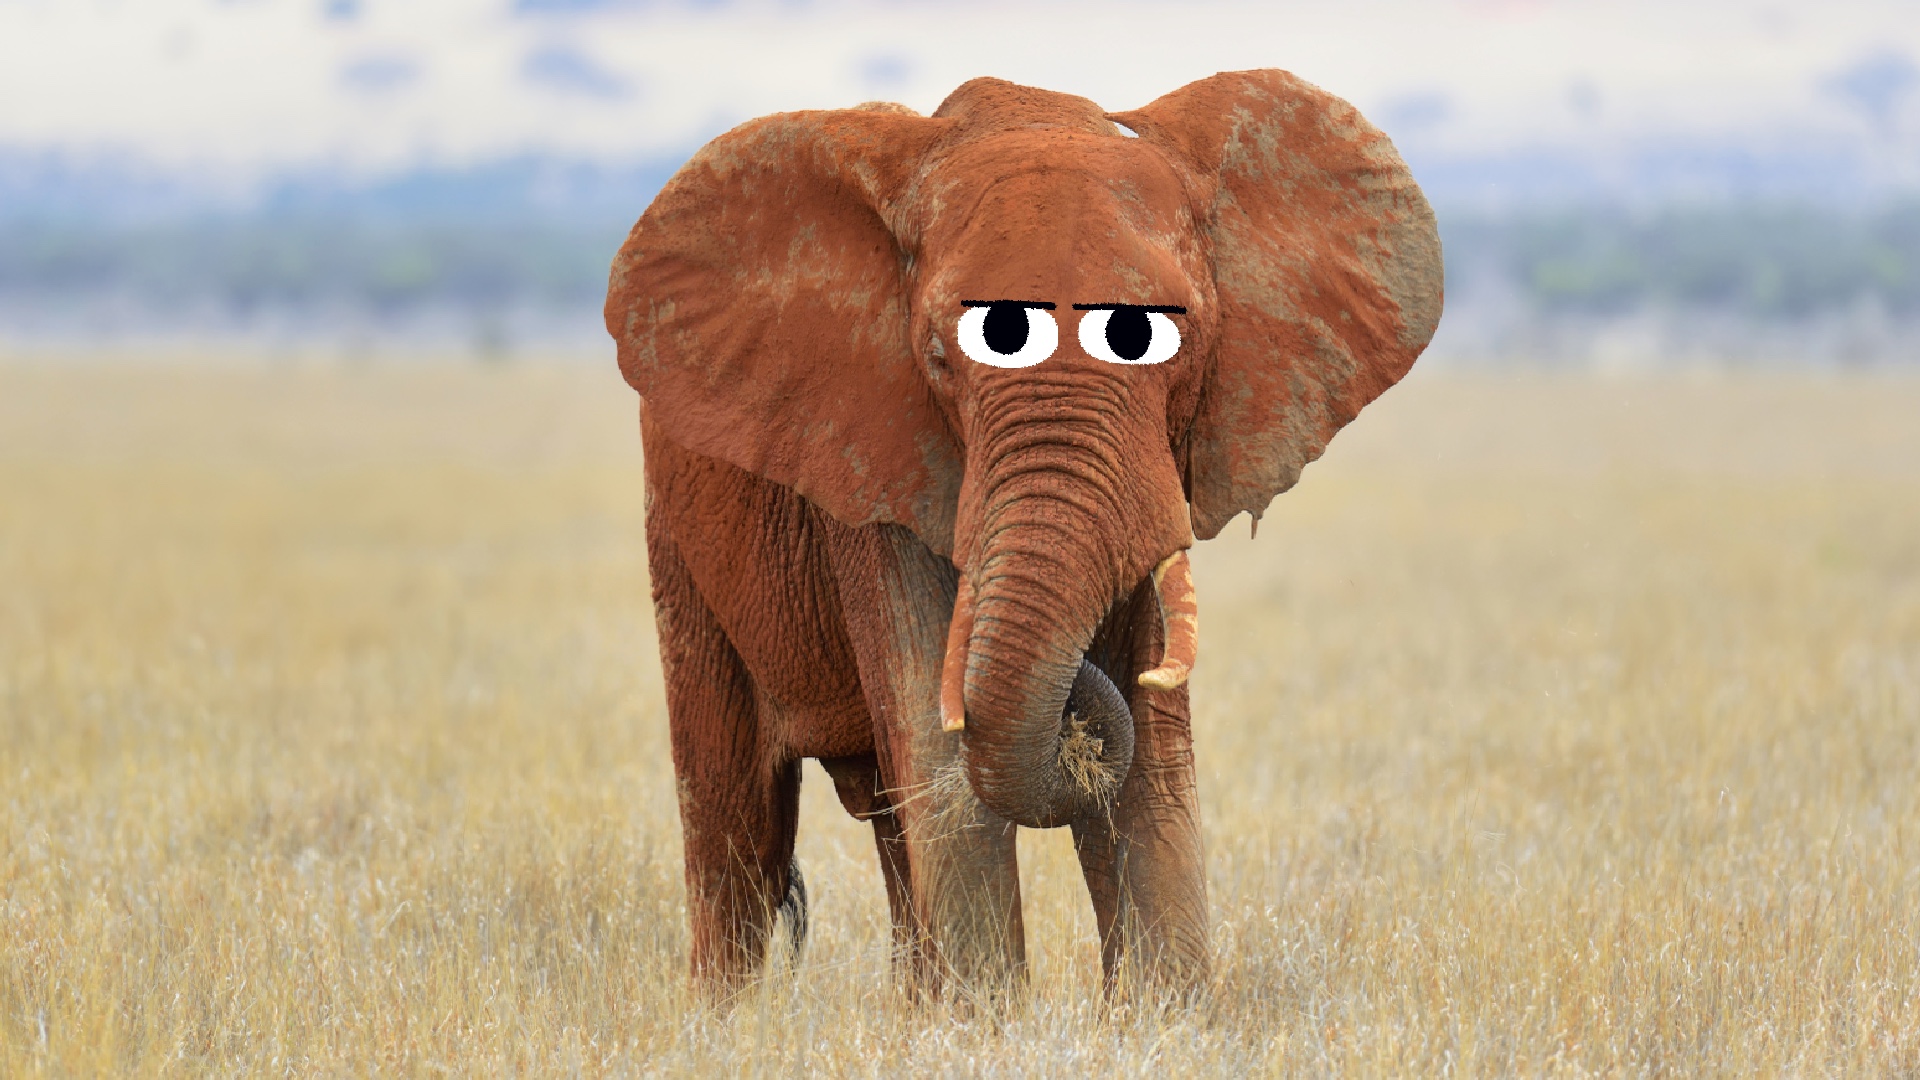 A grumpy looking elephant